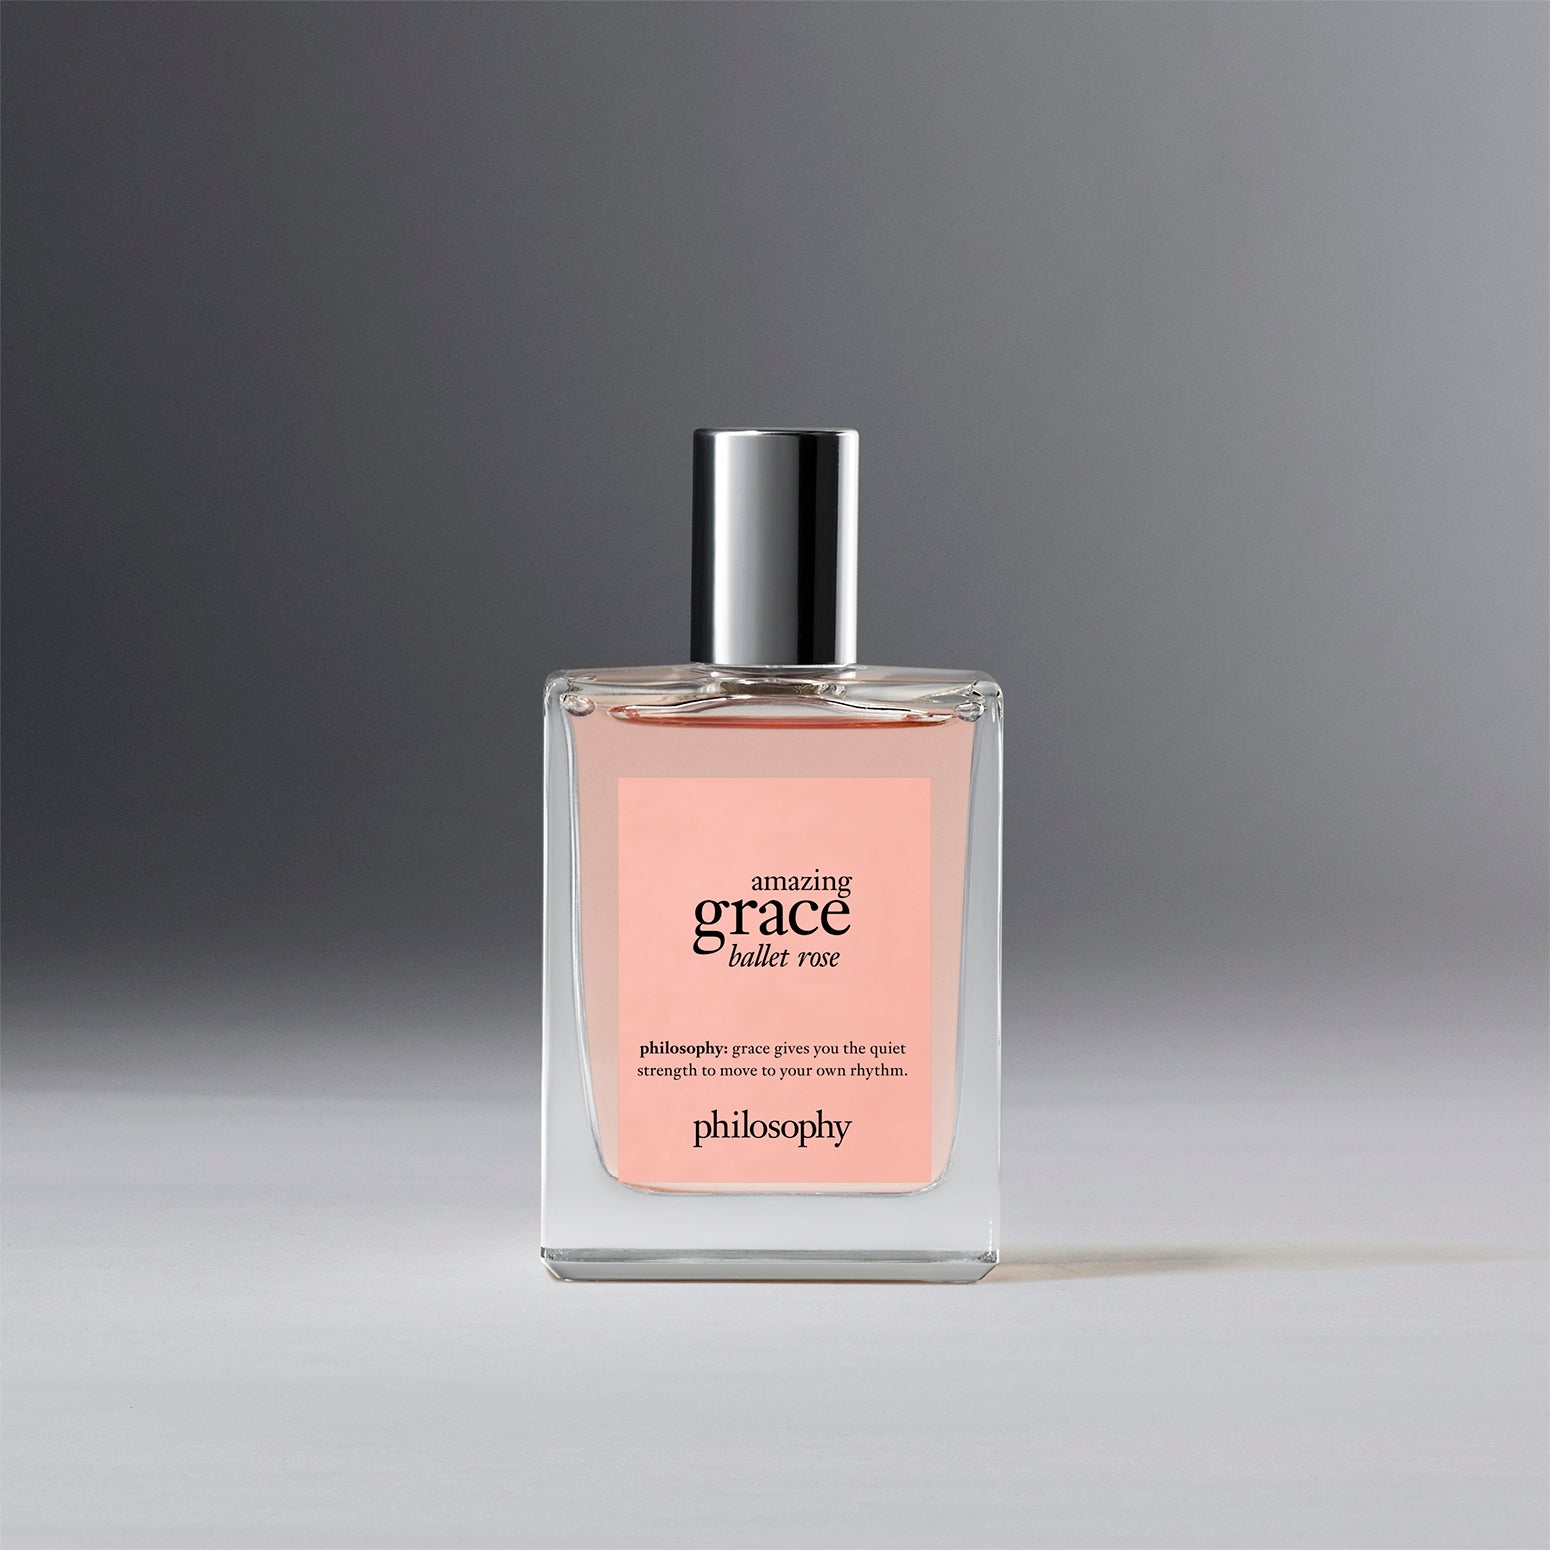 Chloé new refillable perfume: Rose naturelle intense review